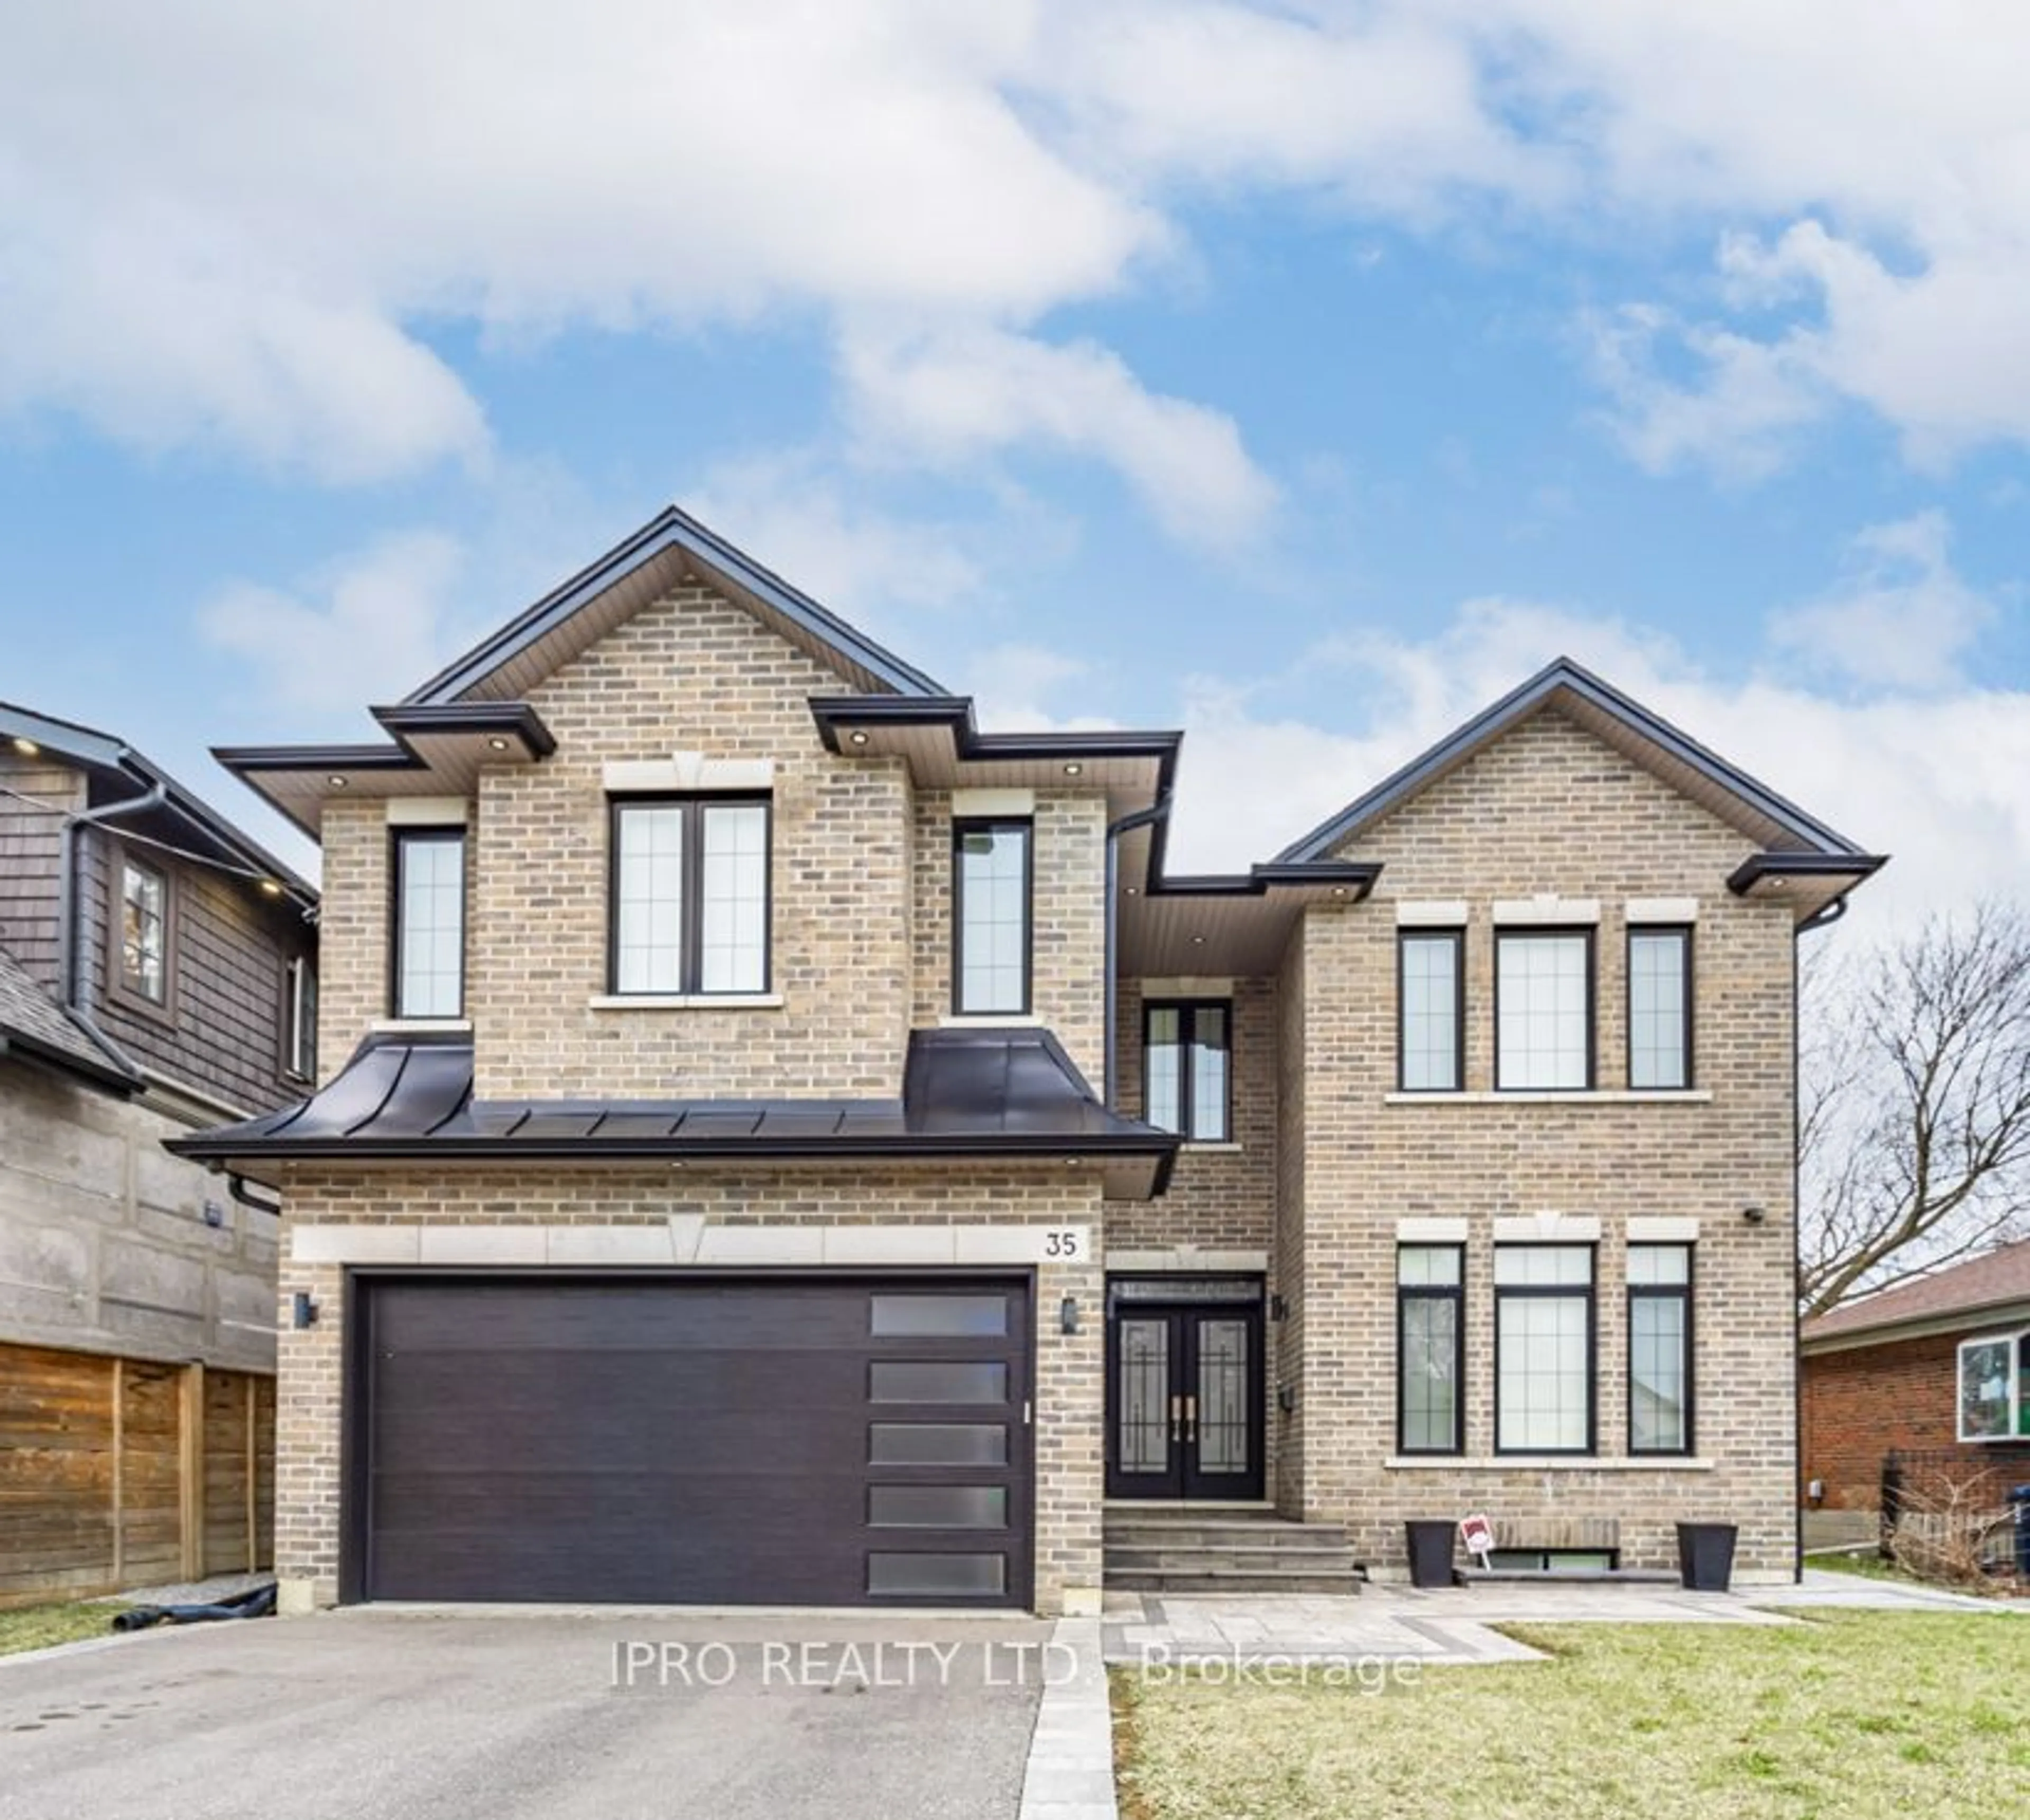 Home with brick exterior material for 35 Orlando Blvd, Toronto Ontario M1R 3N5